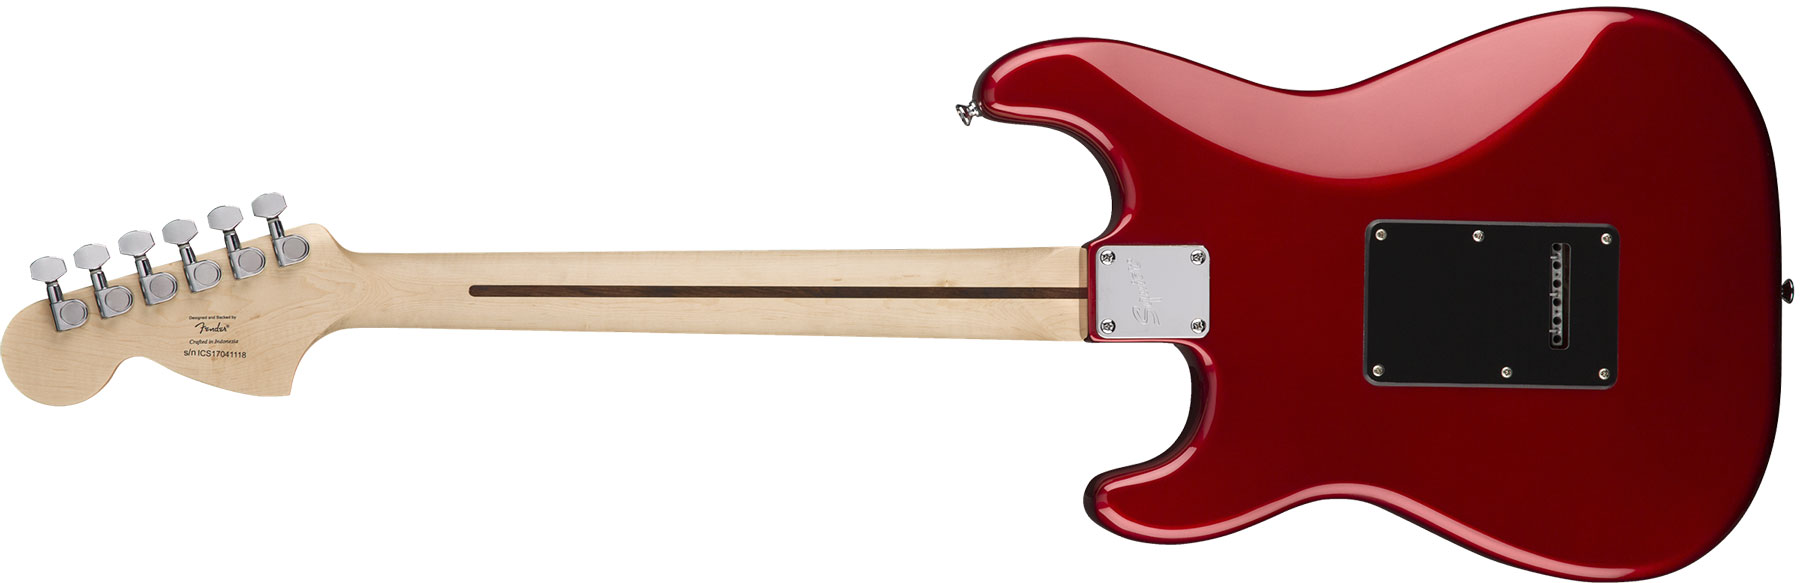 Squier Strat Affinity Hss Pack +fender Frontman 15g Trem Lau - Candy Apple Red - Packs guitarra eléctrica - Variation 2